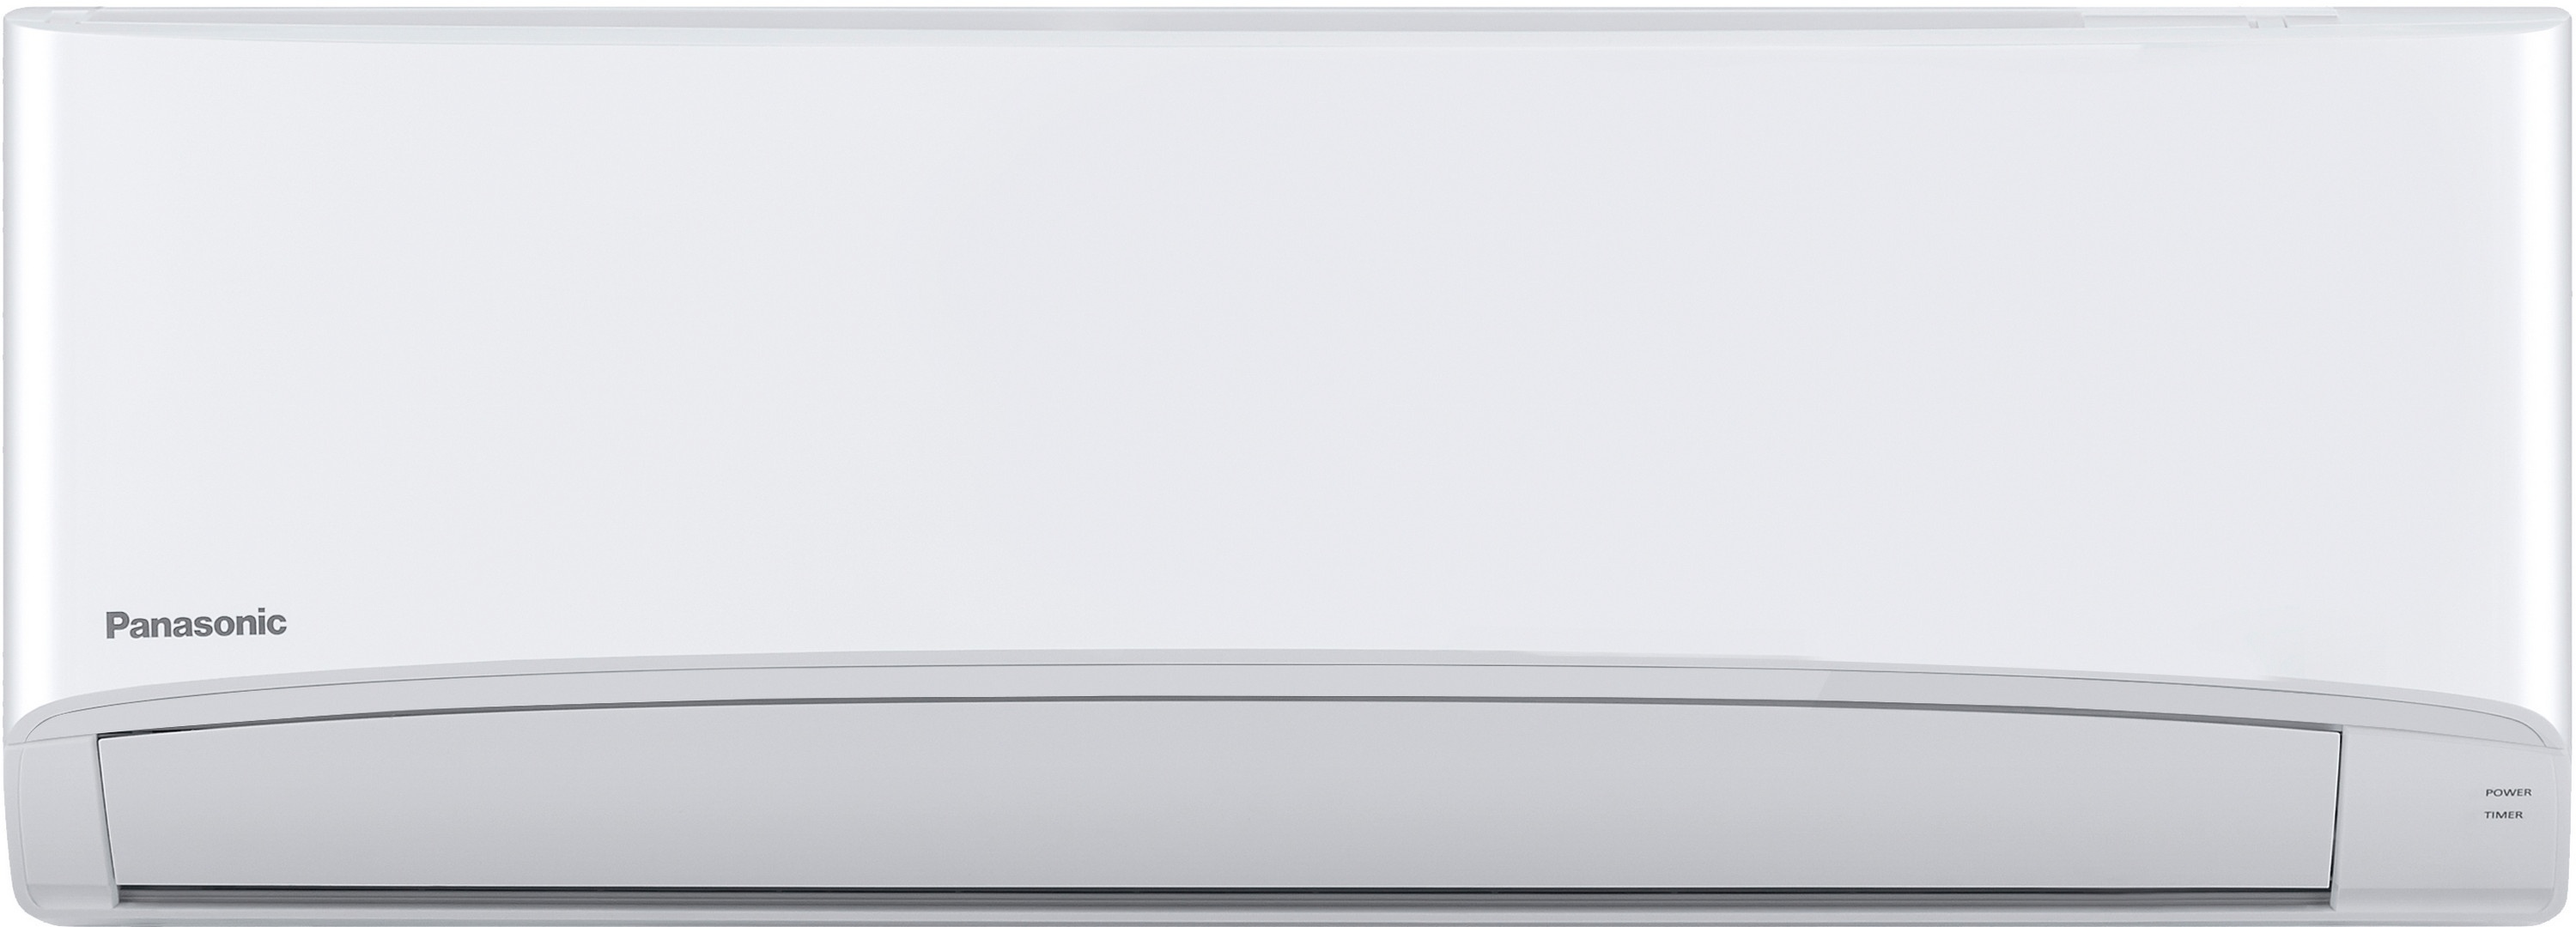 Кондиционер сплит-система Panasonic Compact Inverter CS/CU-TZ20TKEW цена 0.00 грн - фотография 2